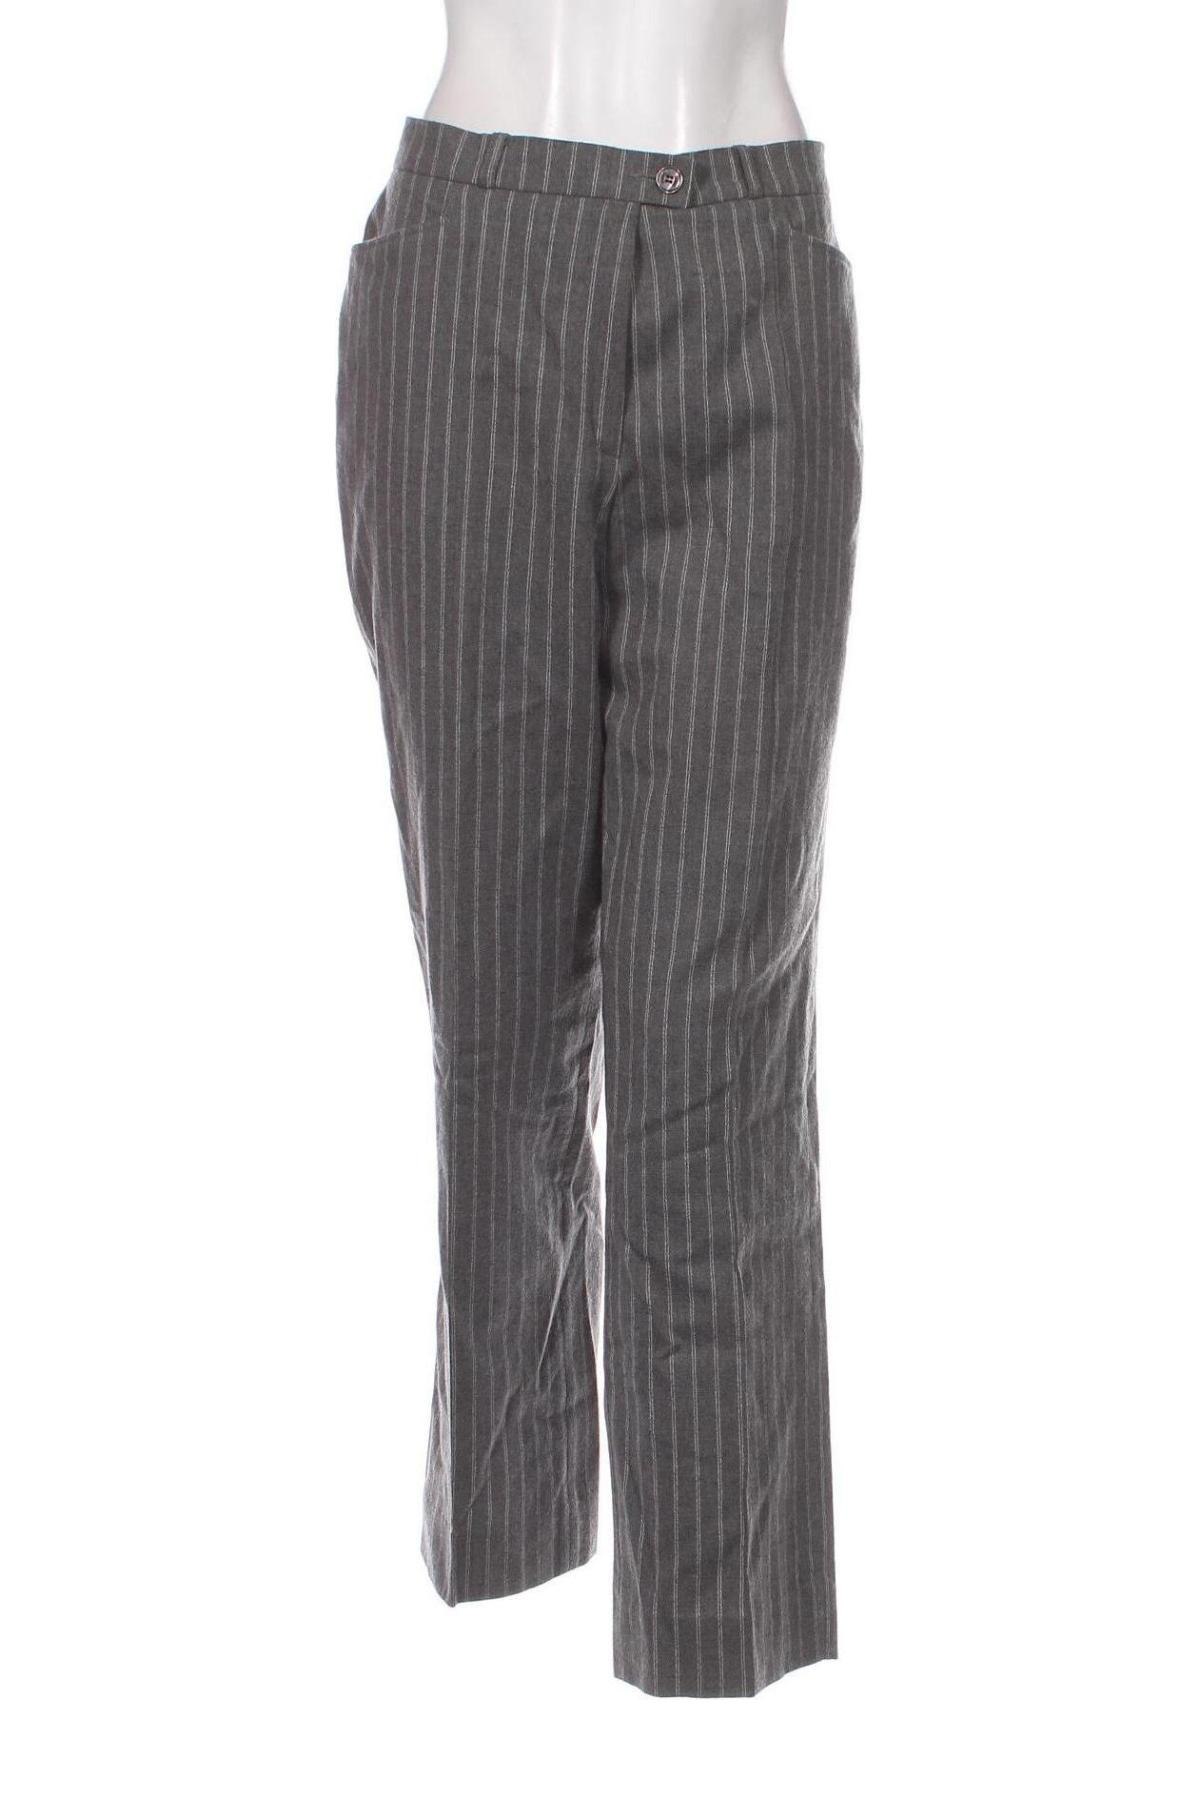 Дамски панталон Delmod, Размер L, Цвят Сив, Цена 10,73 лв.